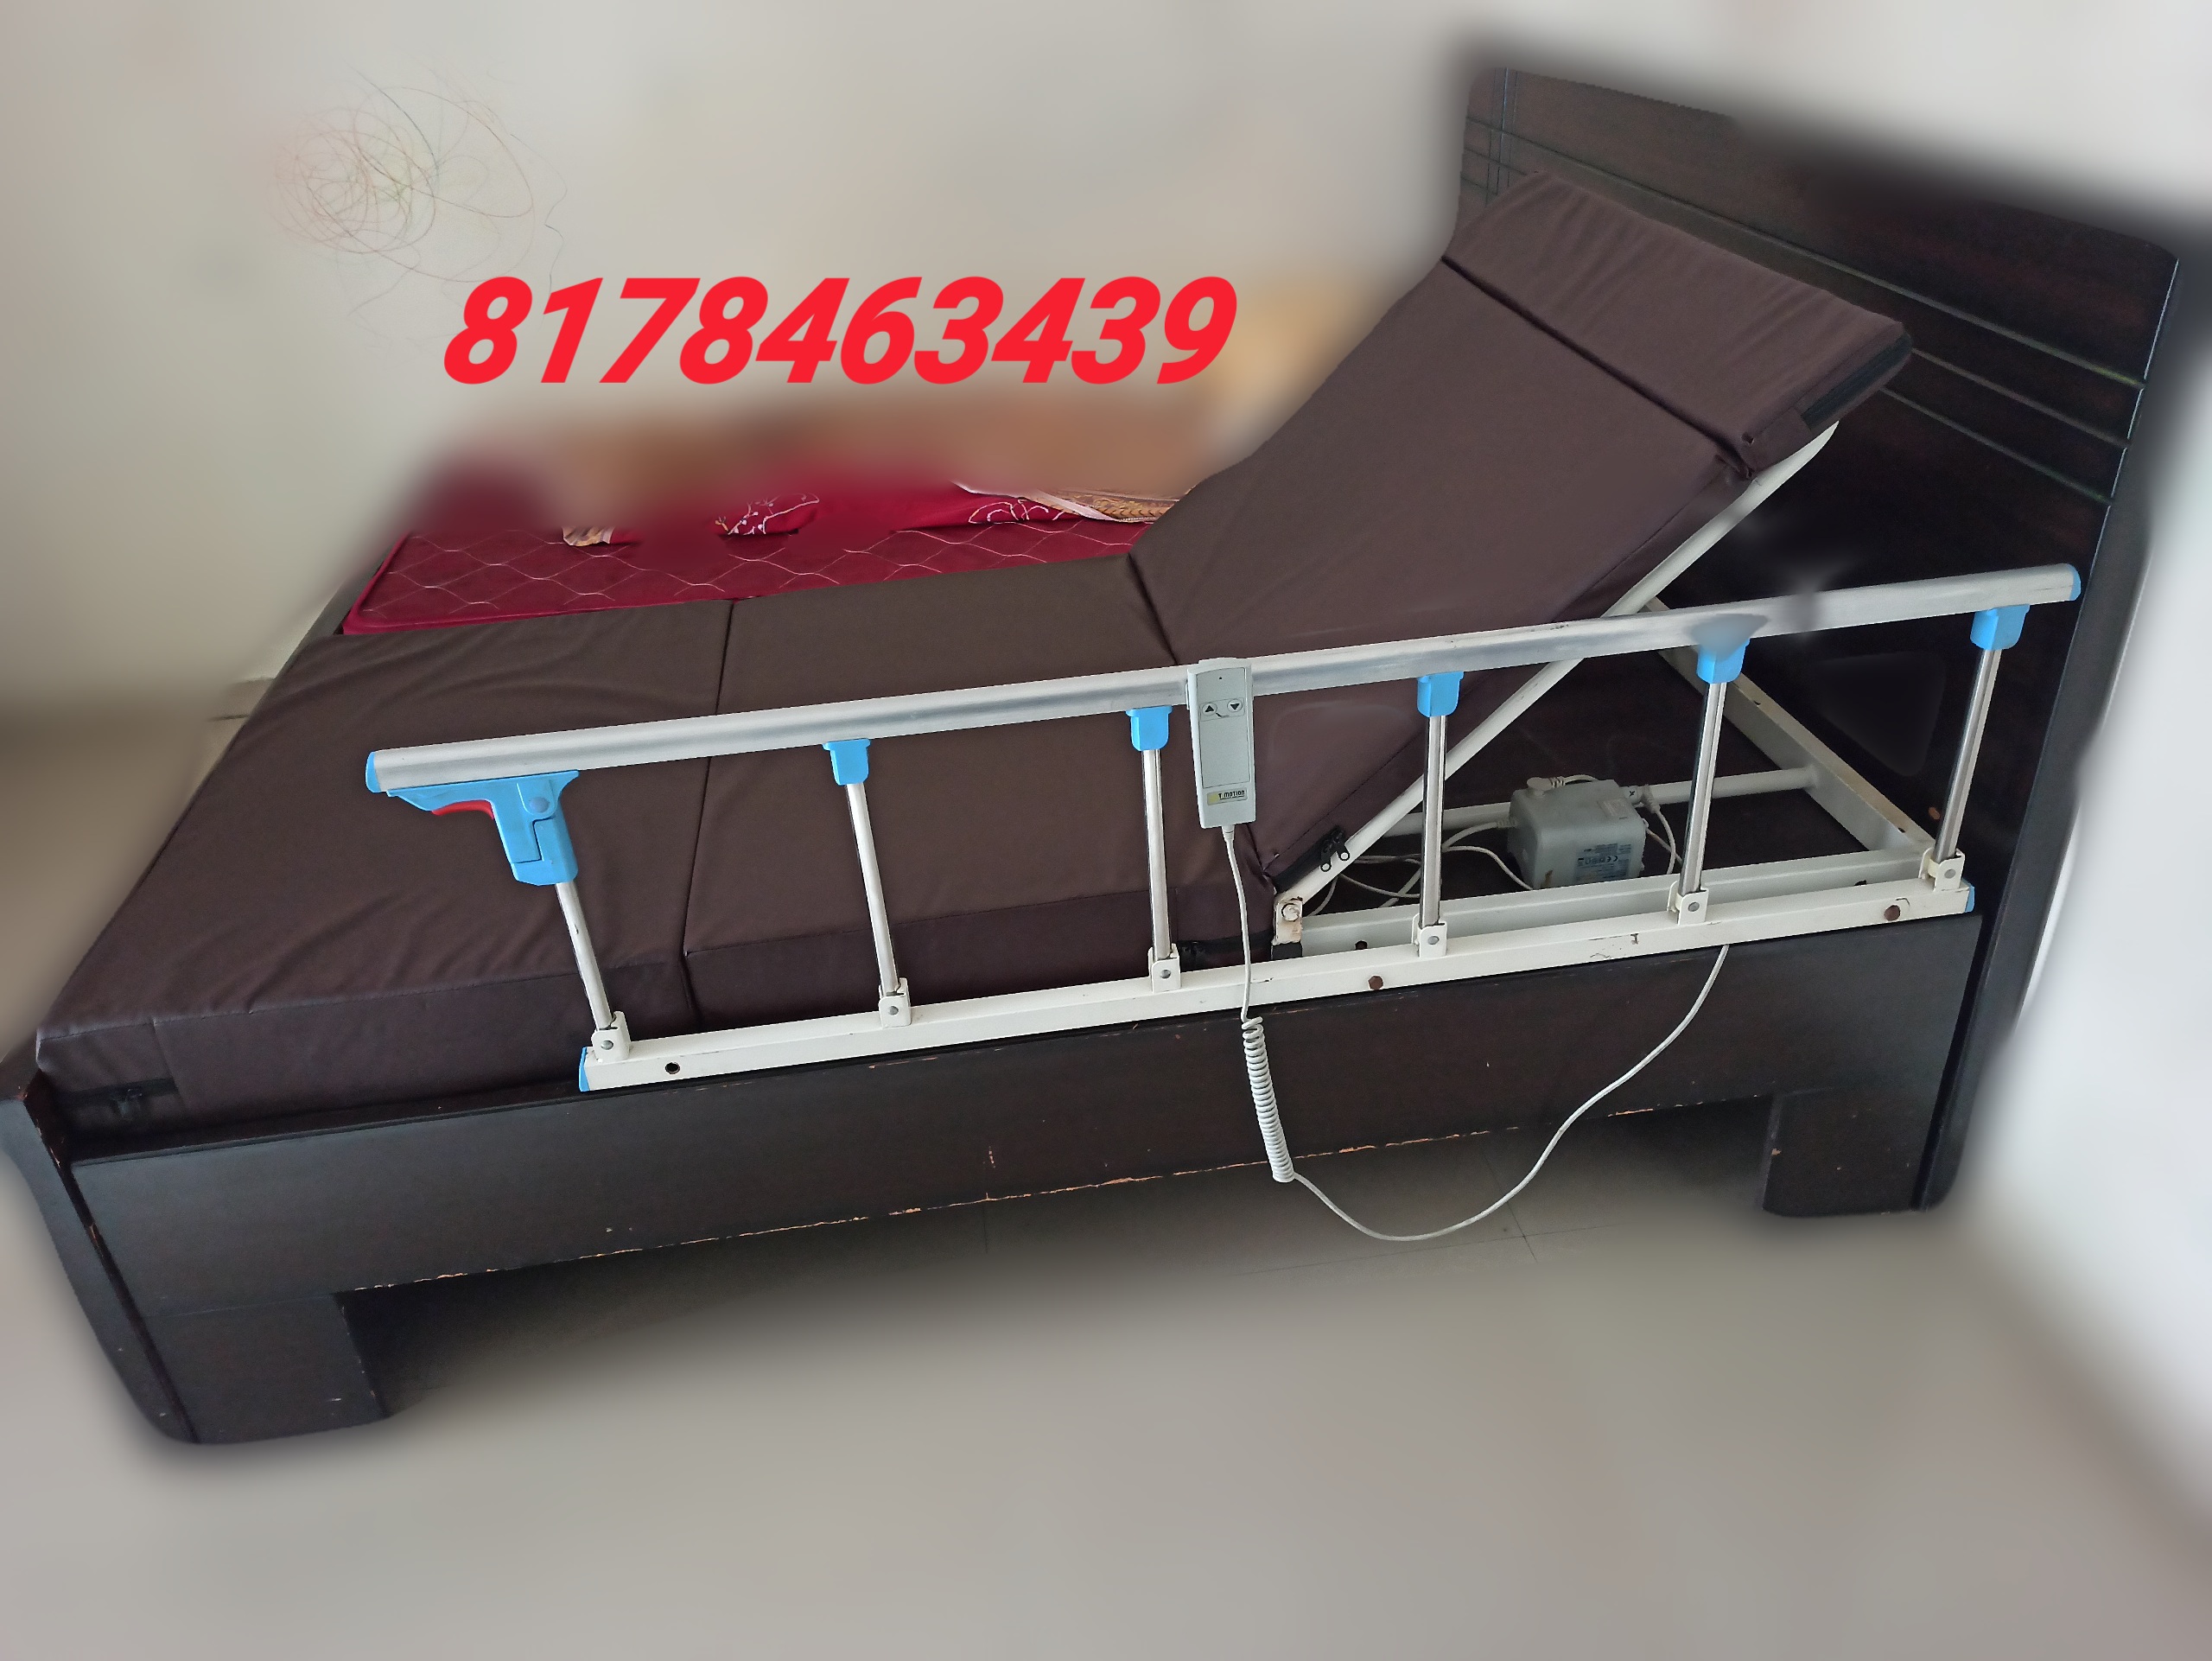 9810525762 HOSPITAL BED RENT IN NOIDA 8178463439